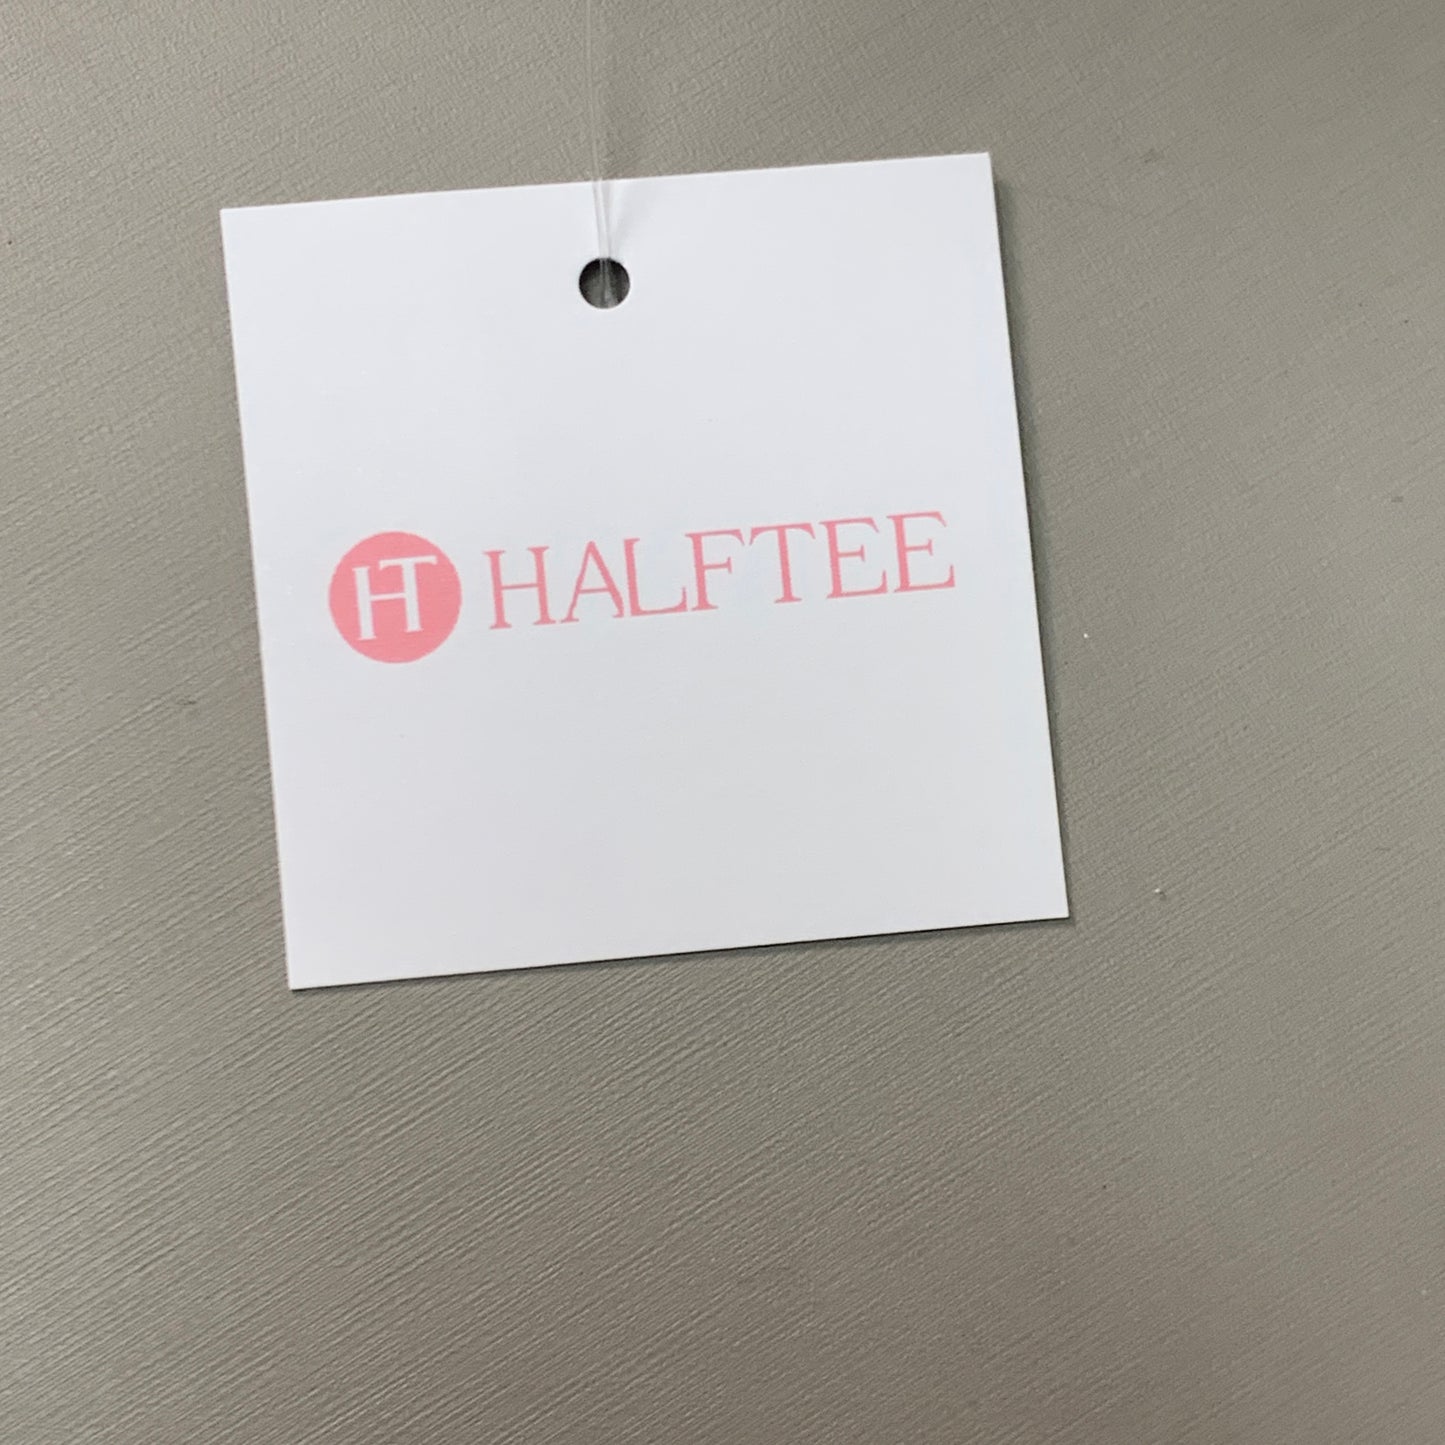 HALFTEE Full Lace Tank Nylon & Spandex Blend Floral White L (23)